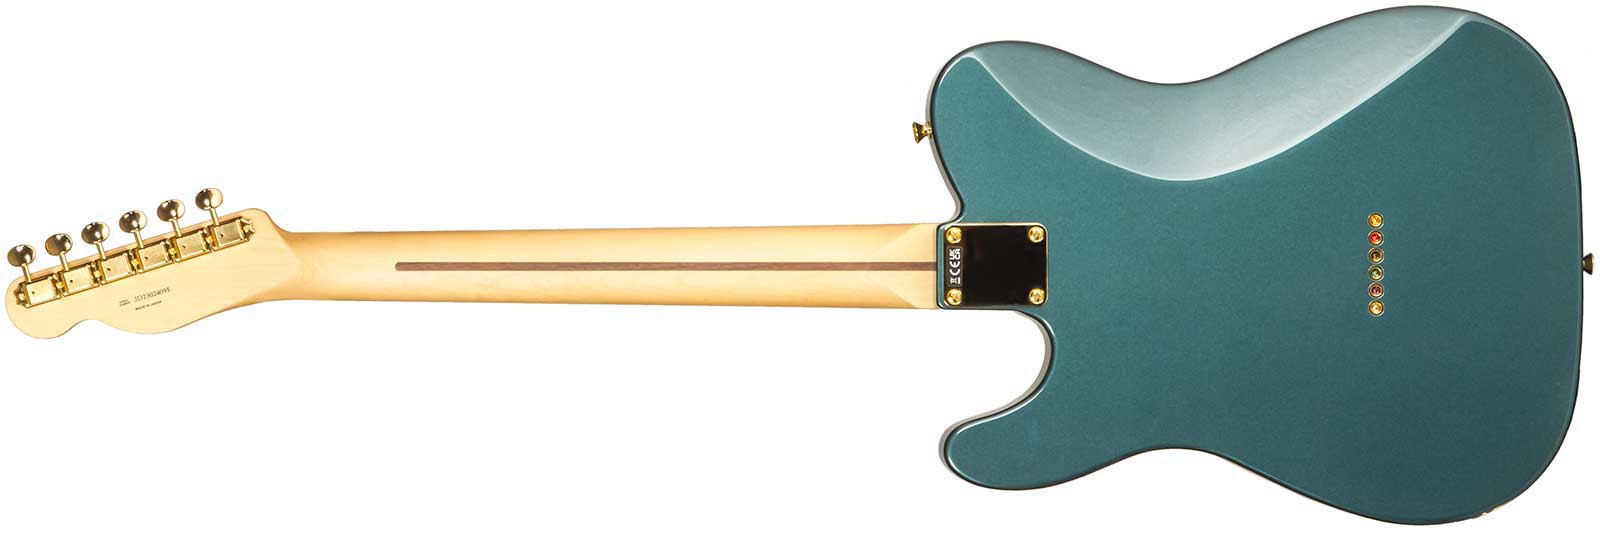 Fender Tele Hybrid Ii Jap 2s Ht Rw - Sherwood Green Metallic - Guitare Électrique Forme Tel - Variation 1